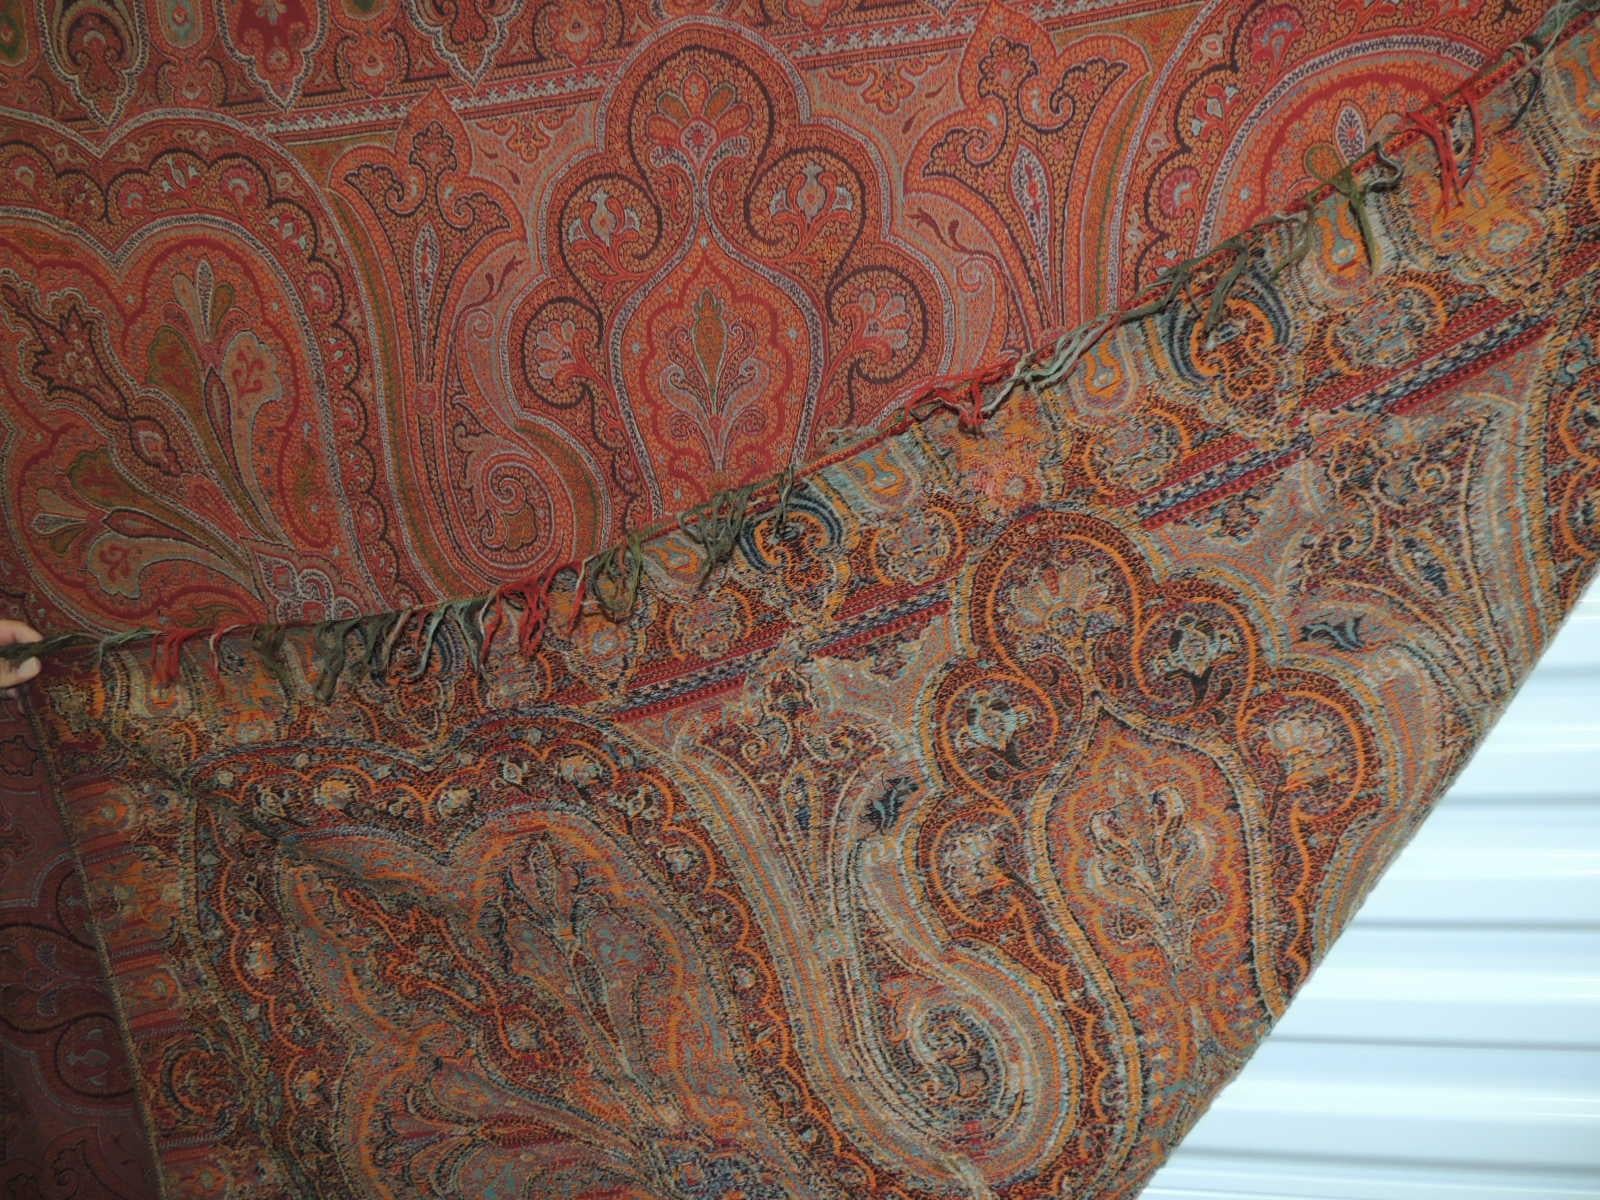 European 19th Century Square Kashmir Paisley Shawl Tapestry